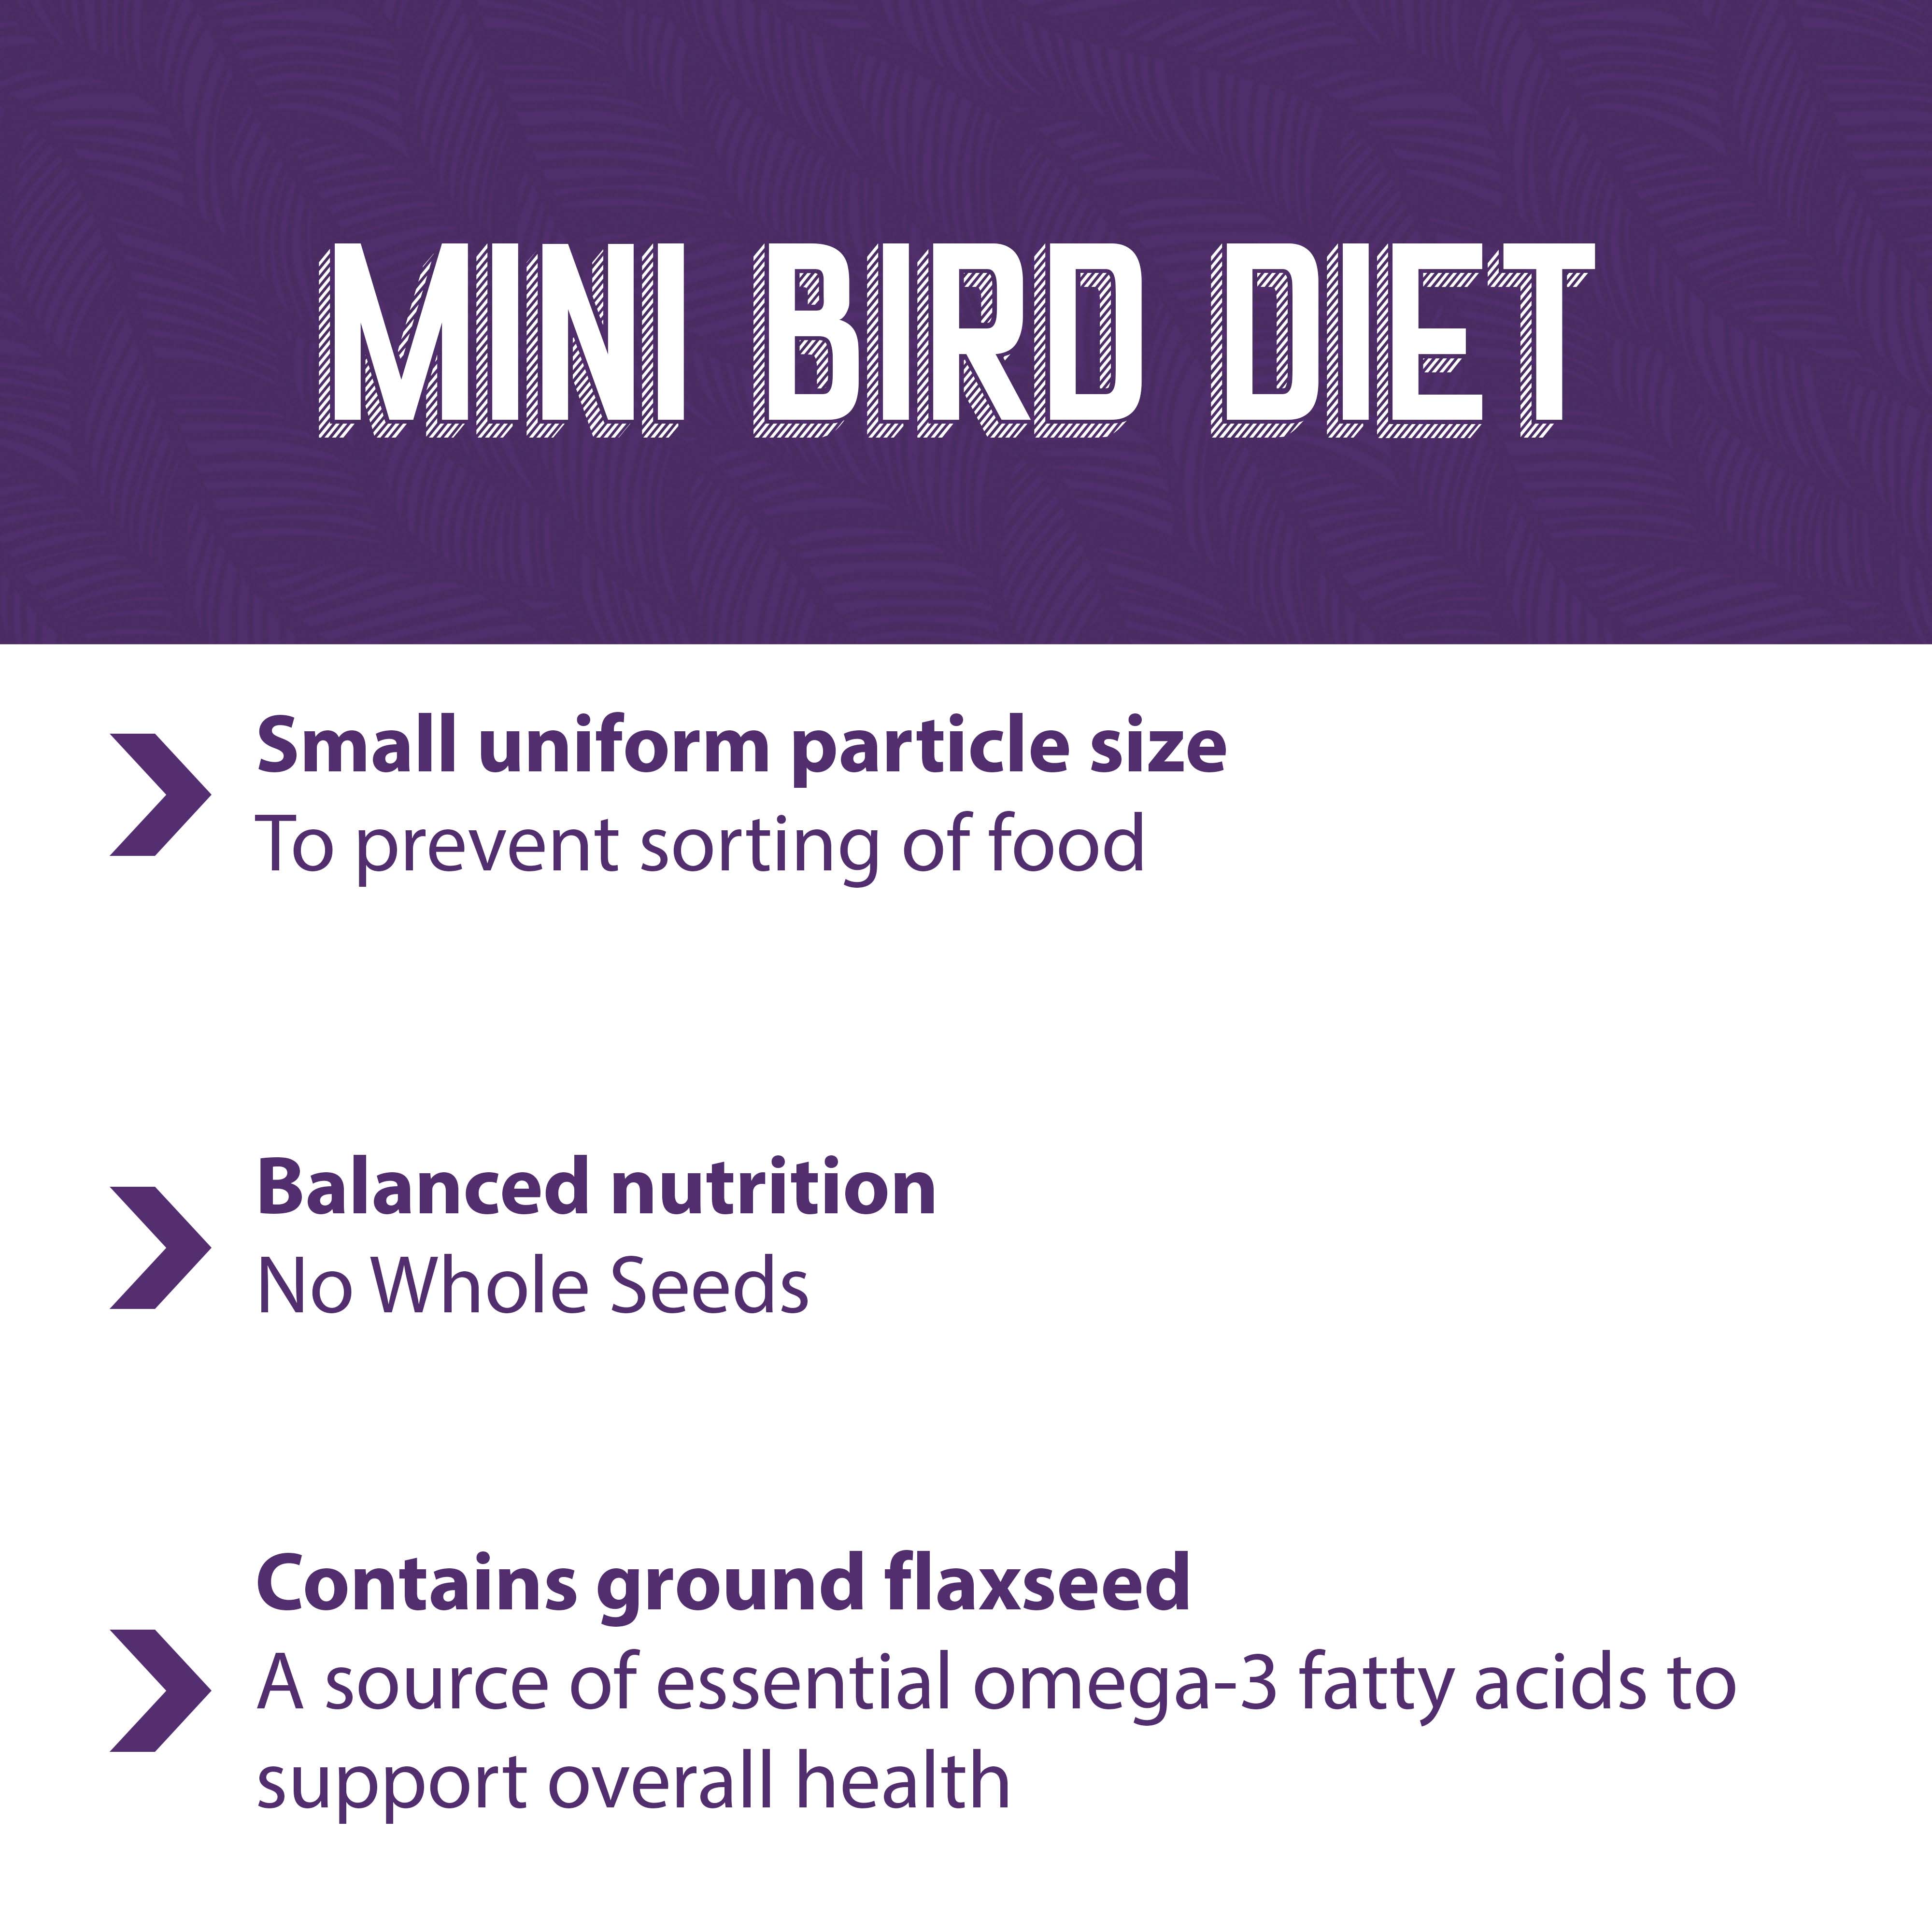 Mini Bird diet is a small uniform particle